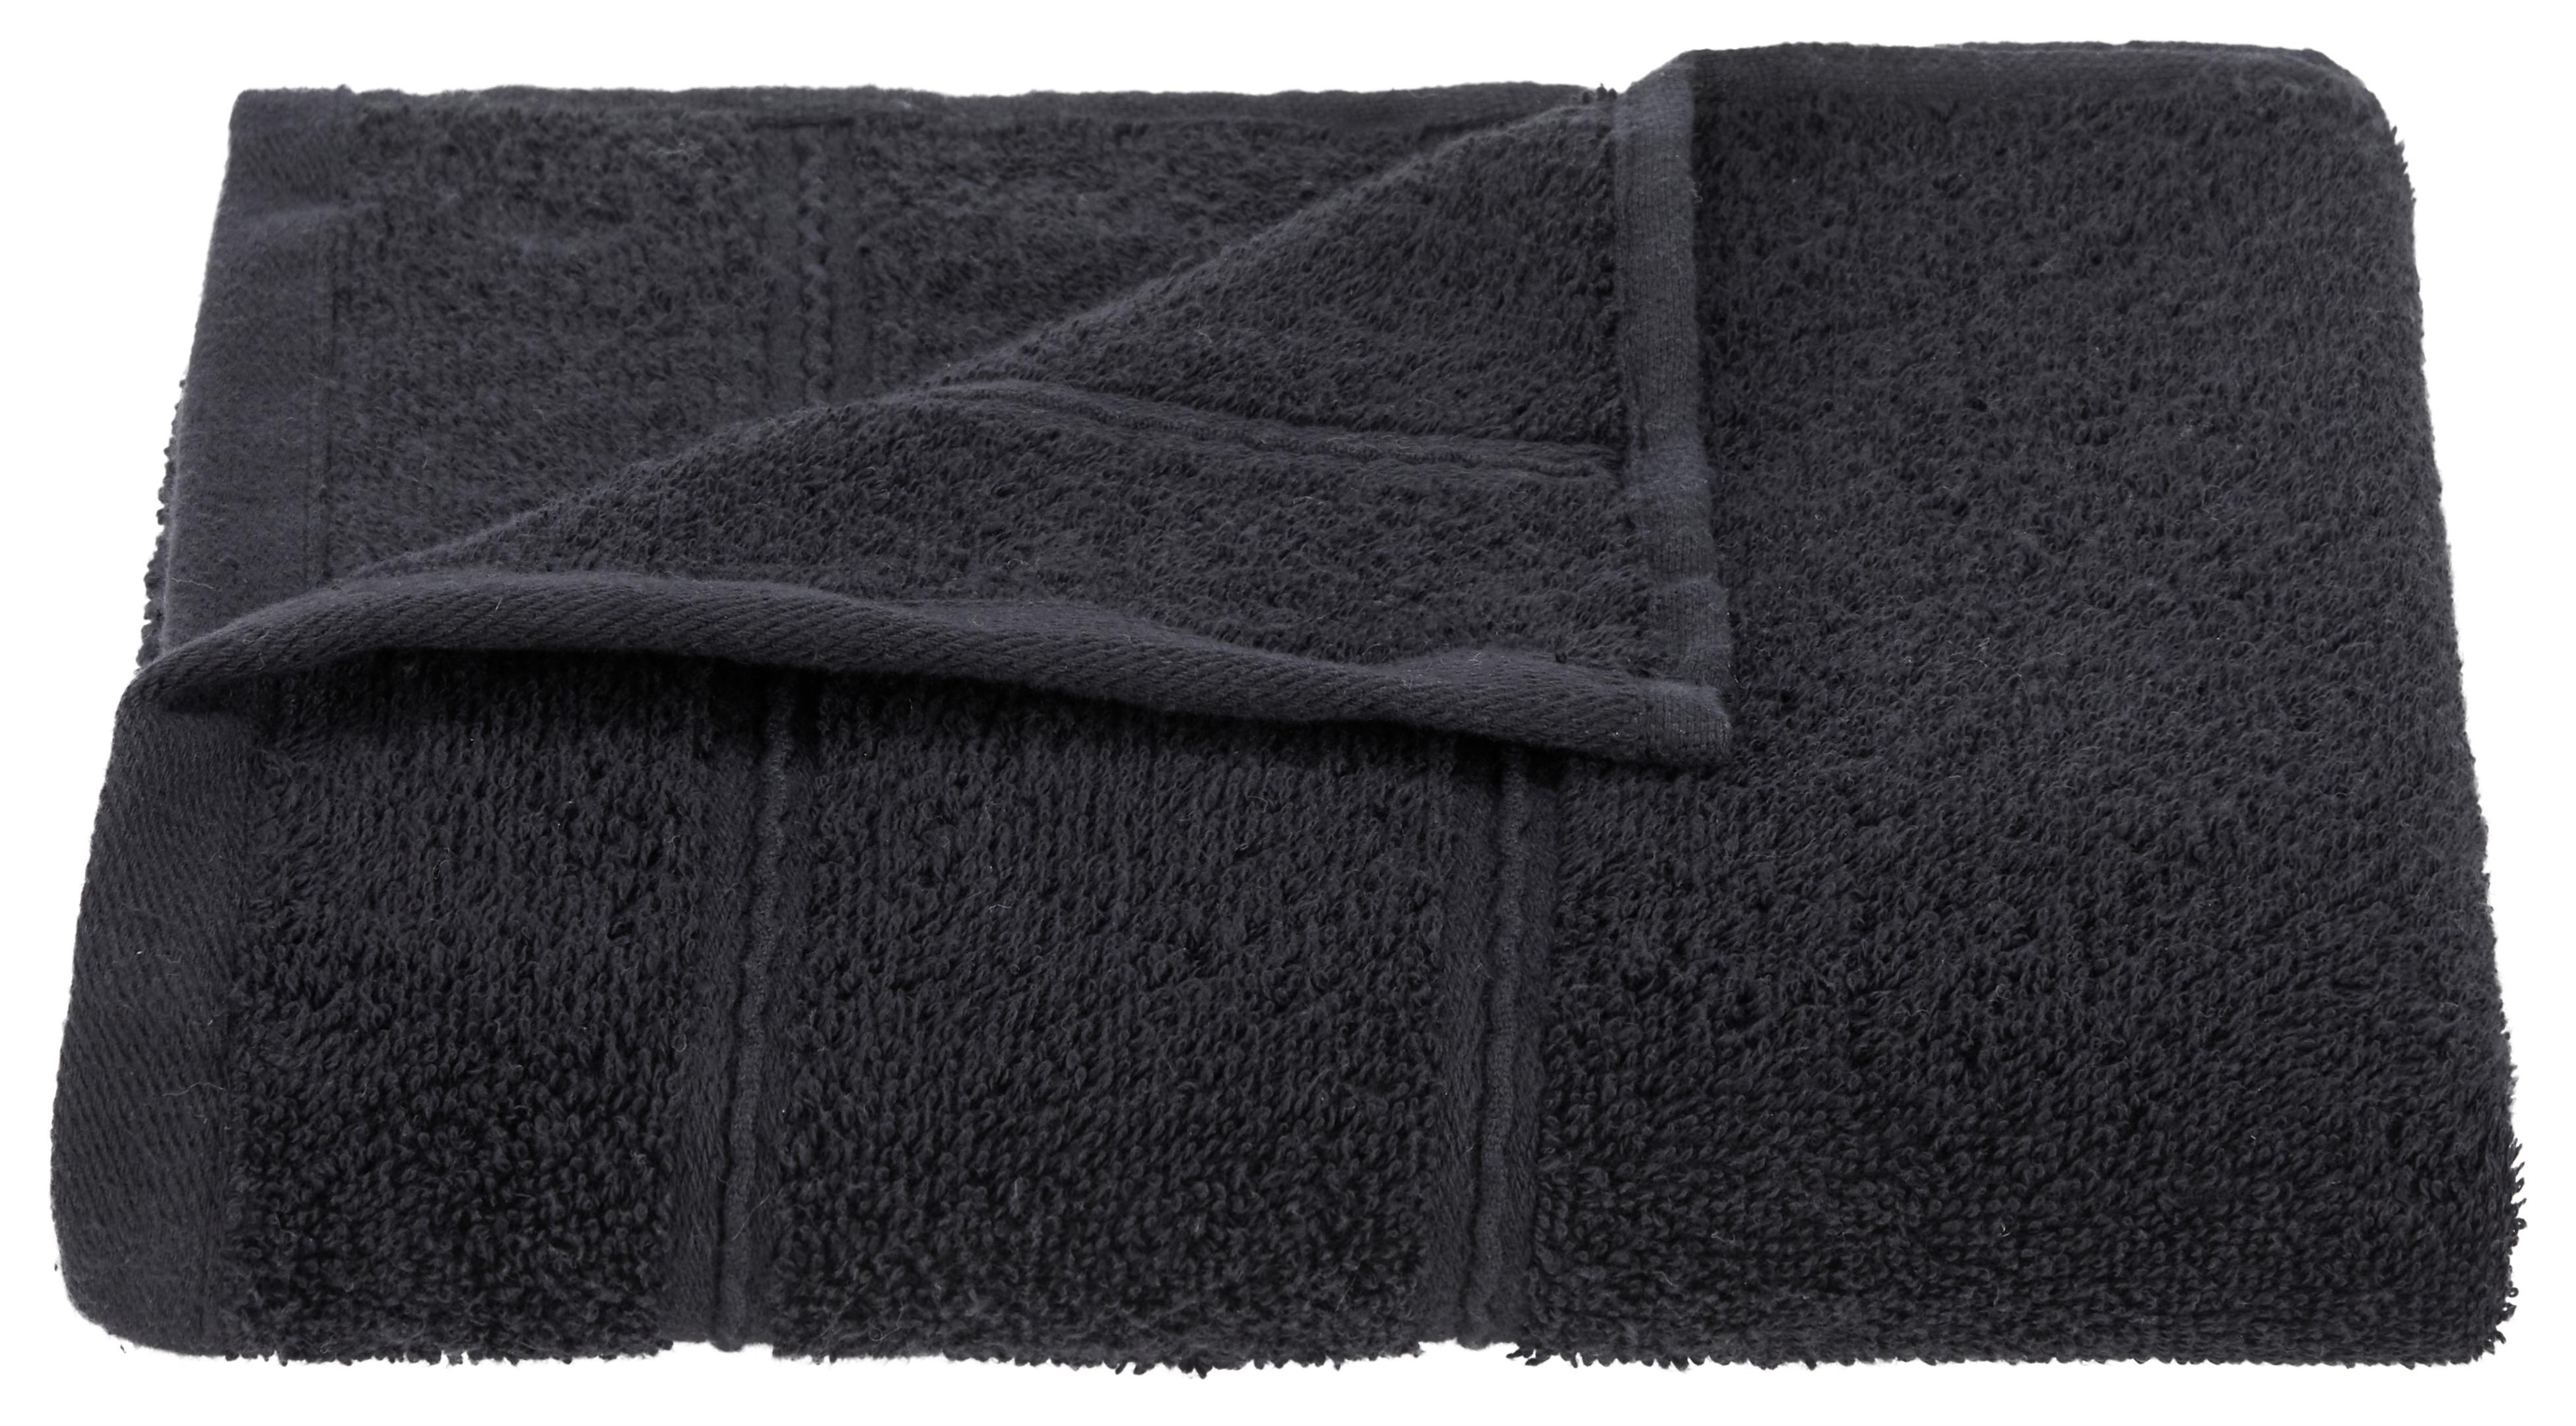 Brisača Melanie -Akt- - črna, tekstil (50/100cm) - Modern Living